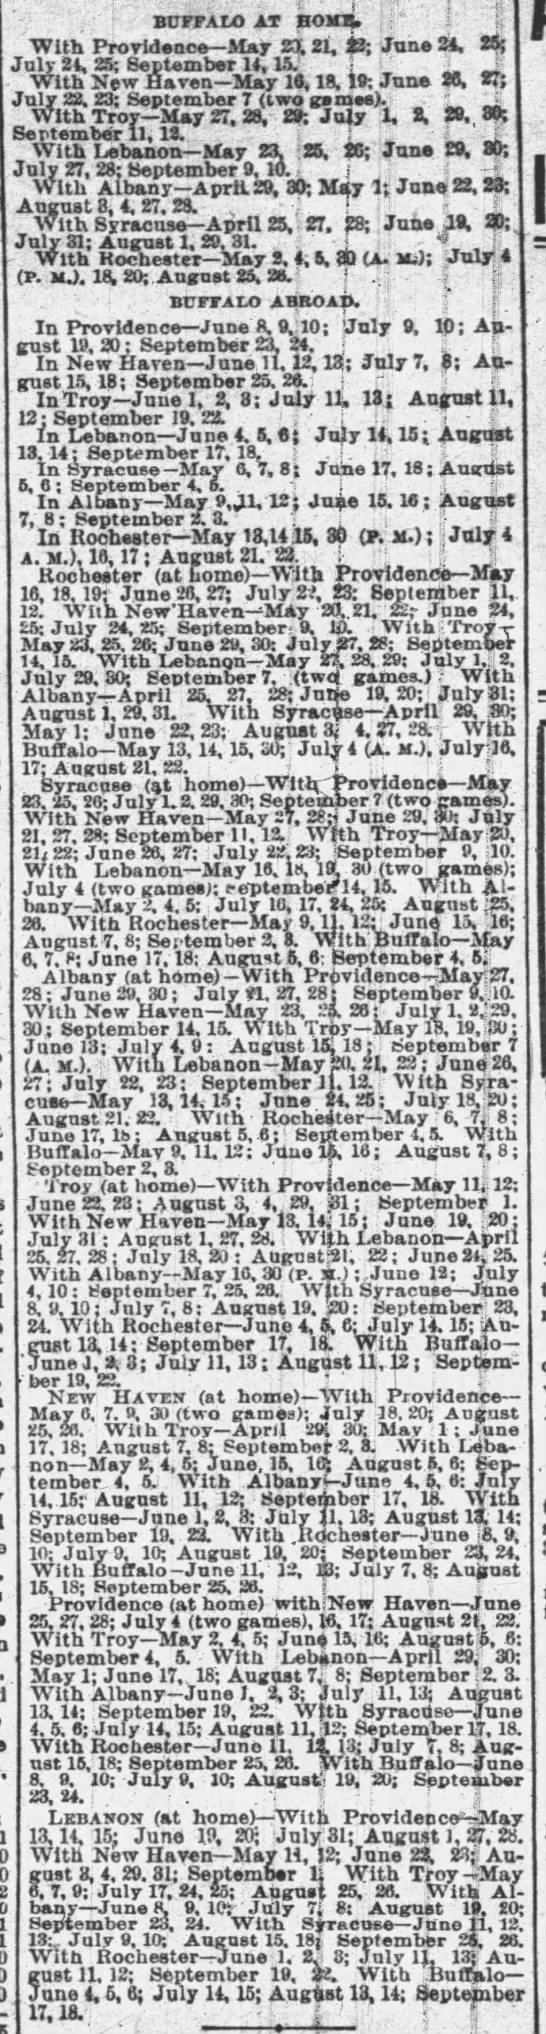 1891 Eastern Association schedule - 